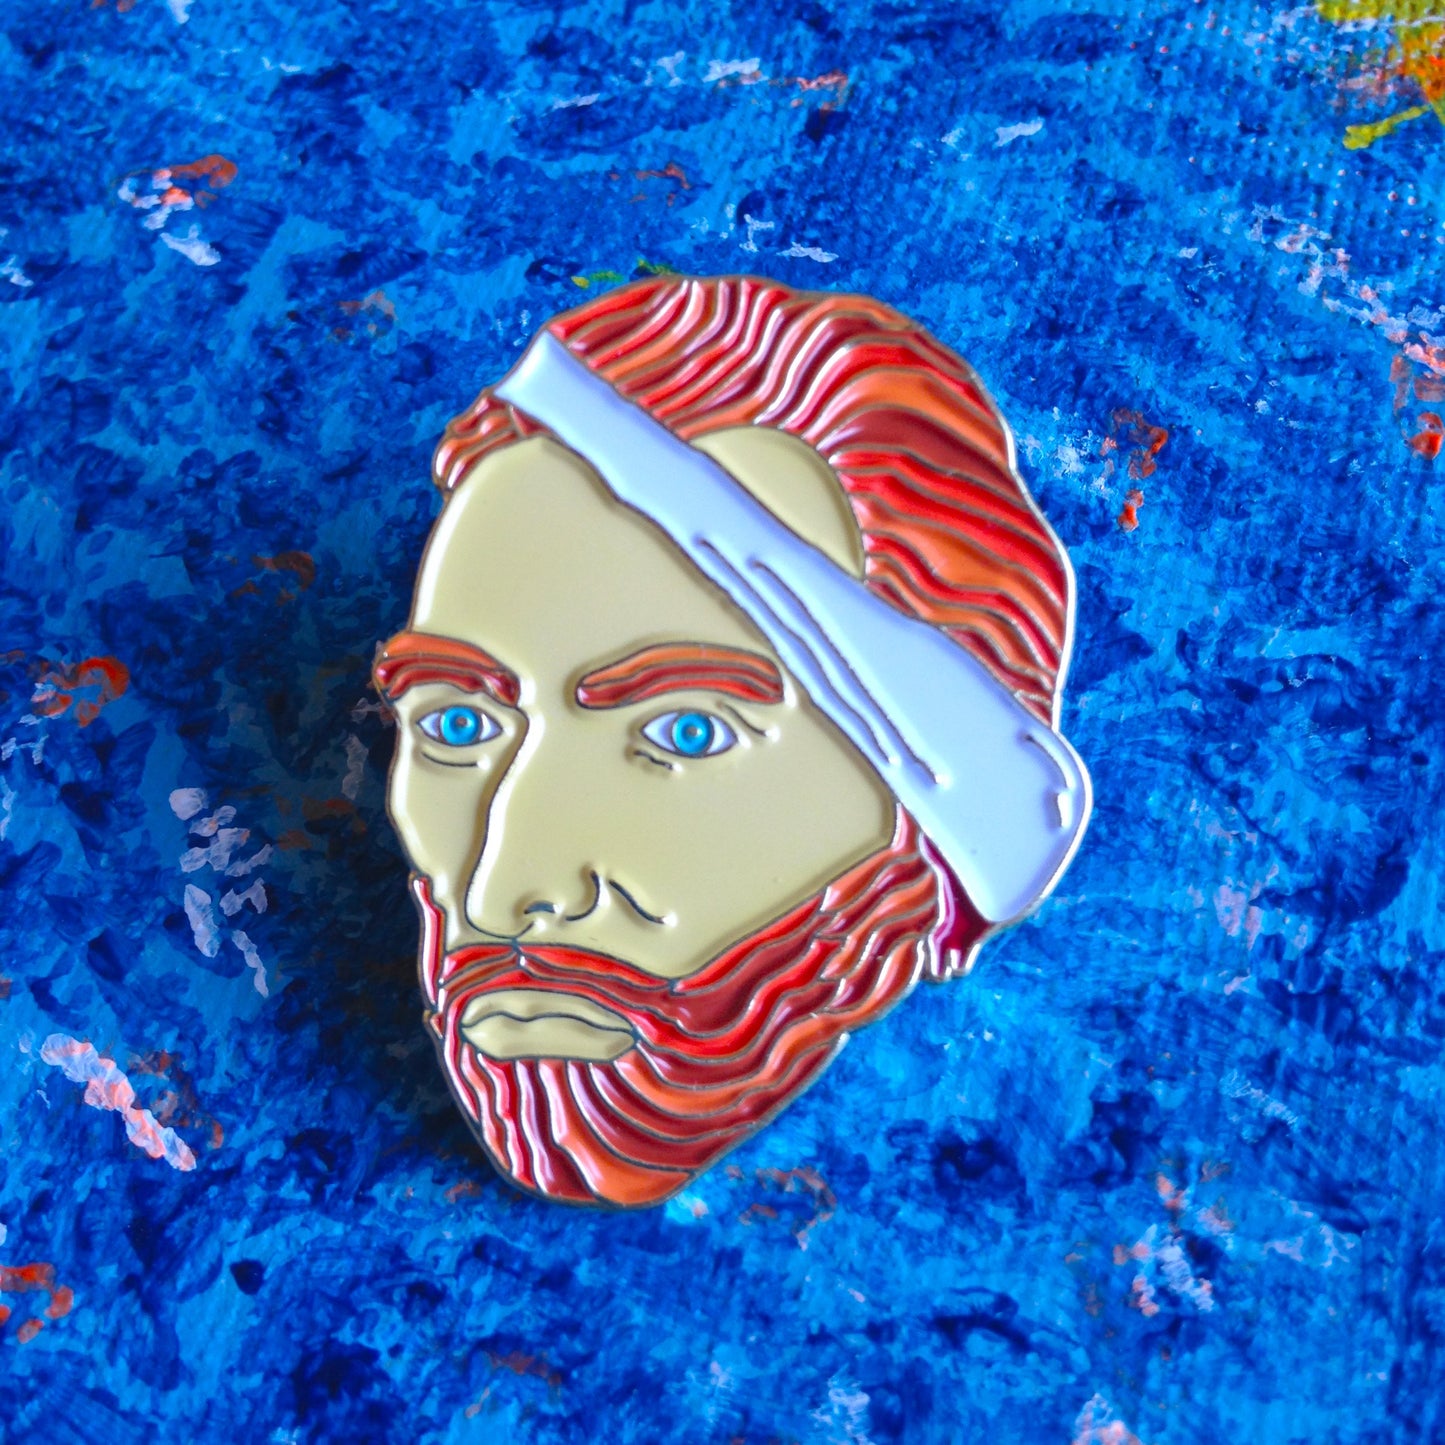 Vincent Van Gogh Enamel Pin Badge Art History Lapel #pingame